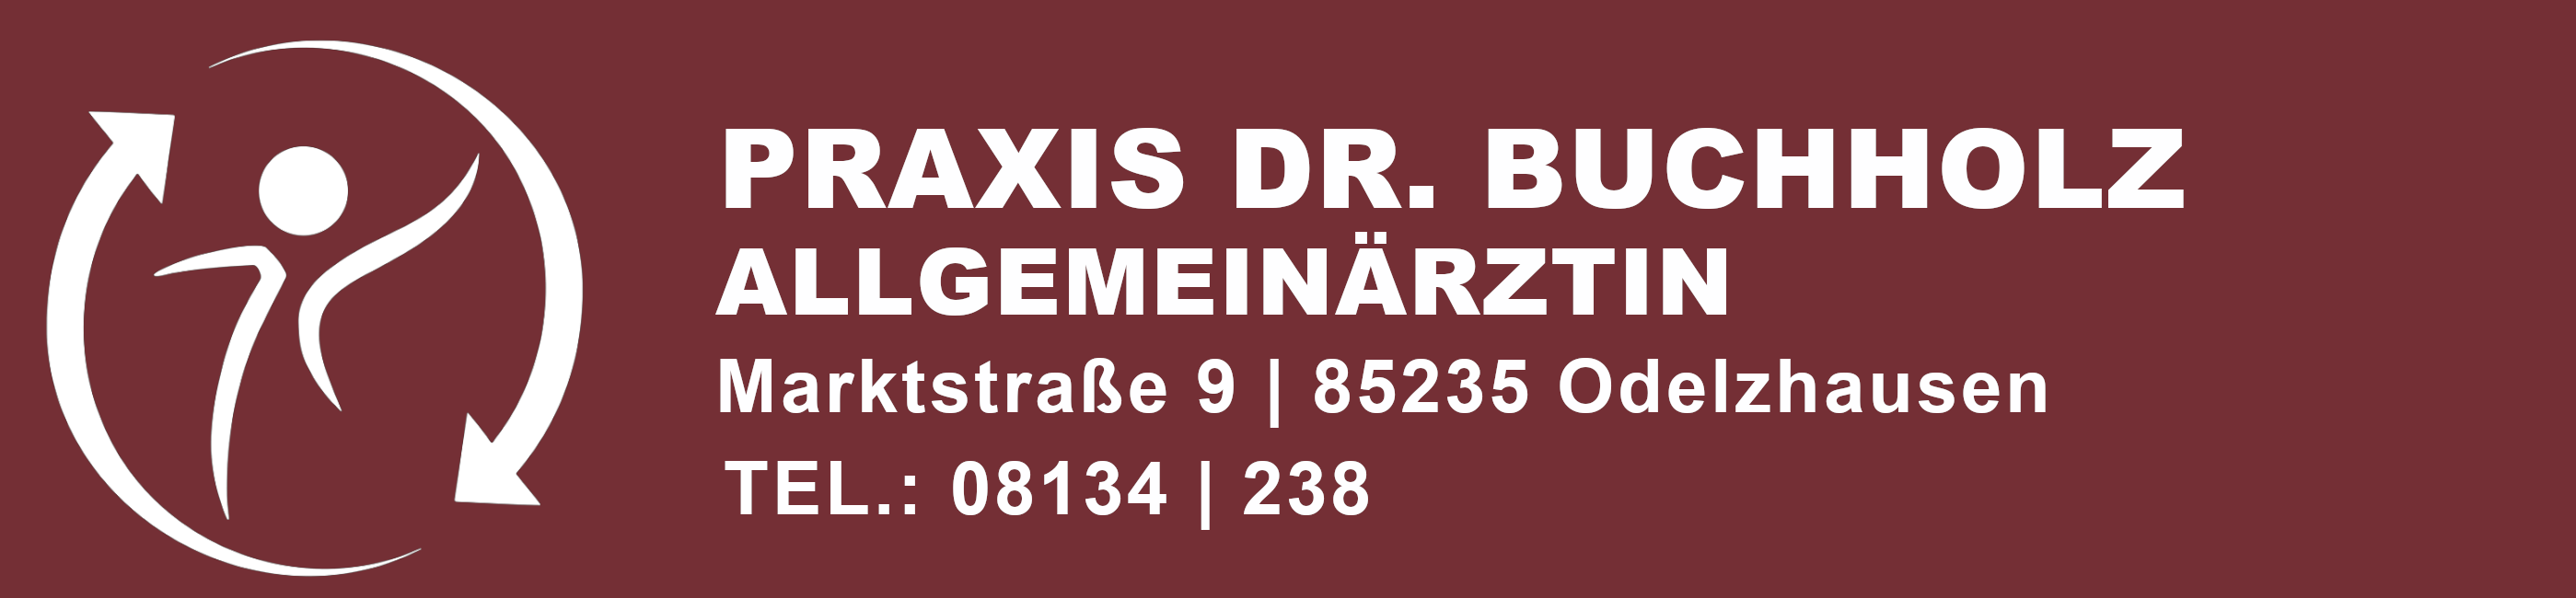 PRAXIS DR. BUCHHOLZ Logo